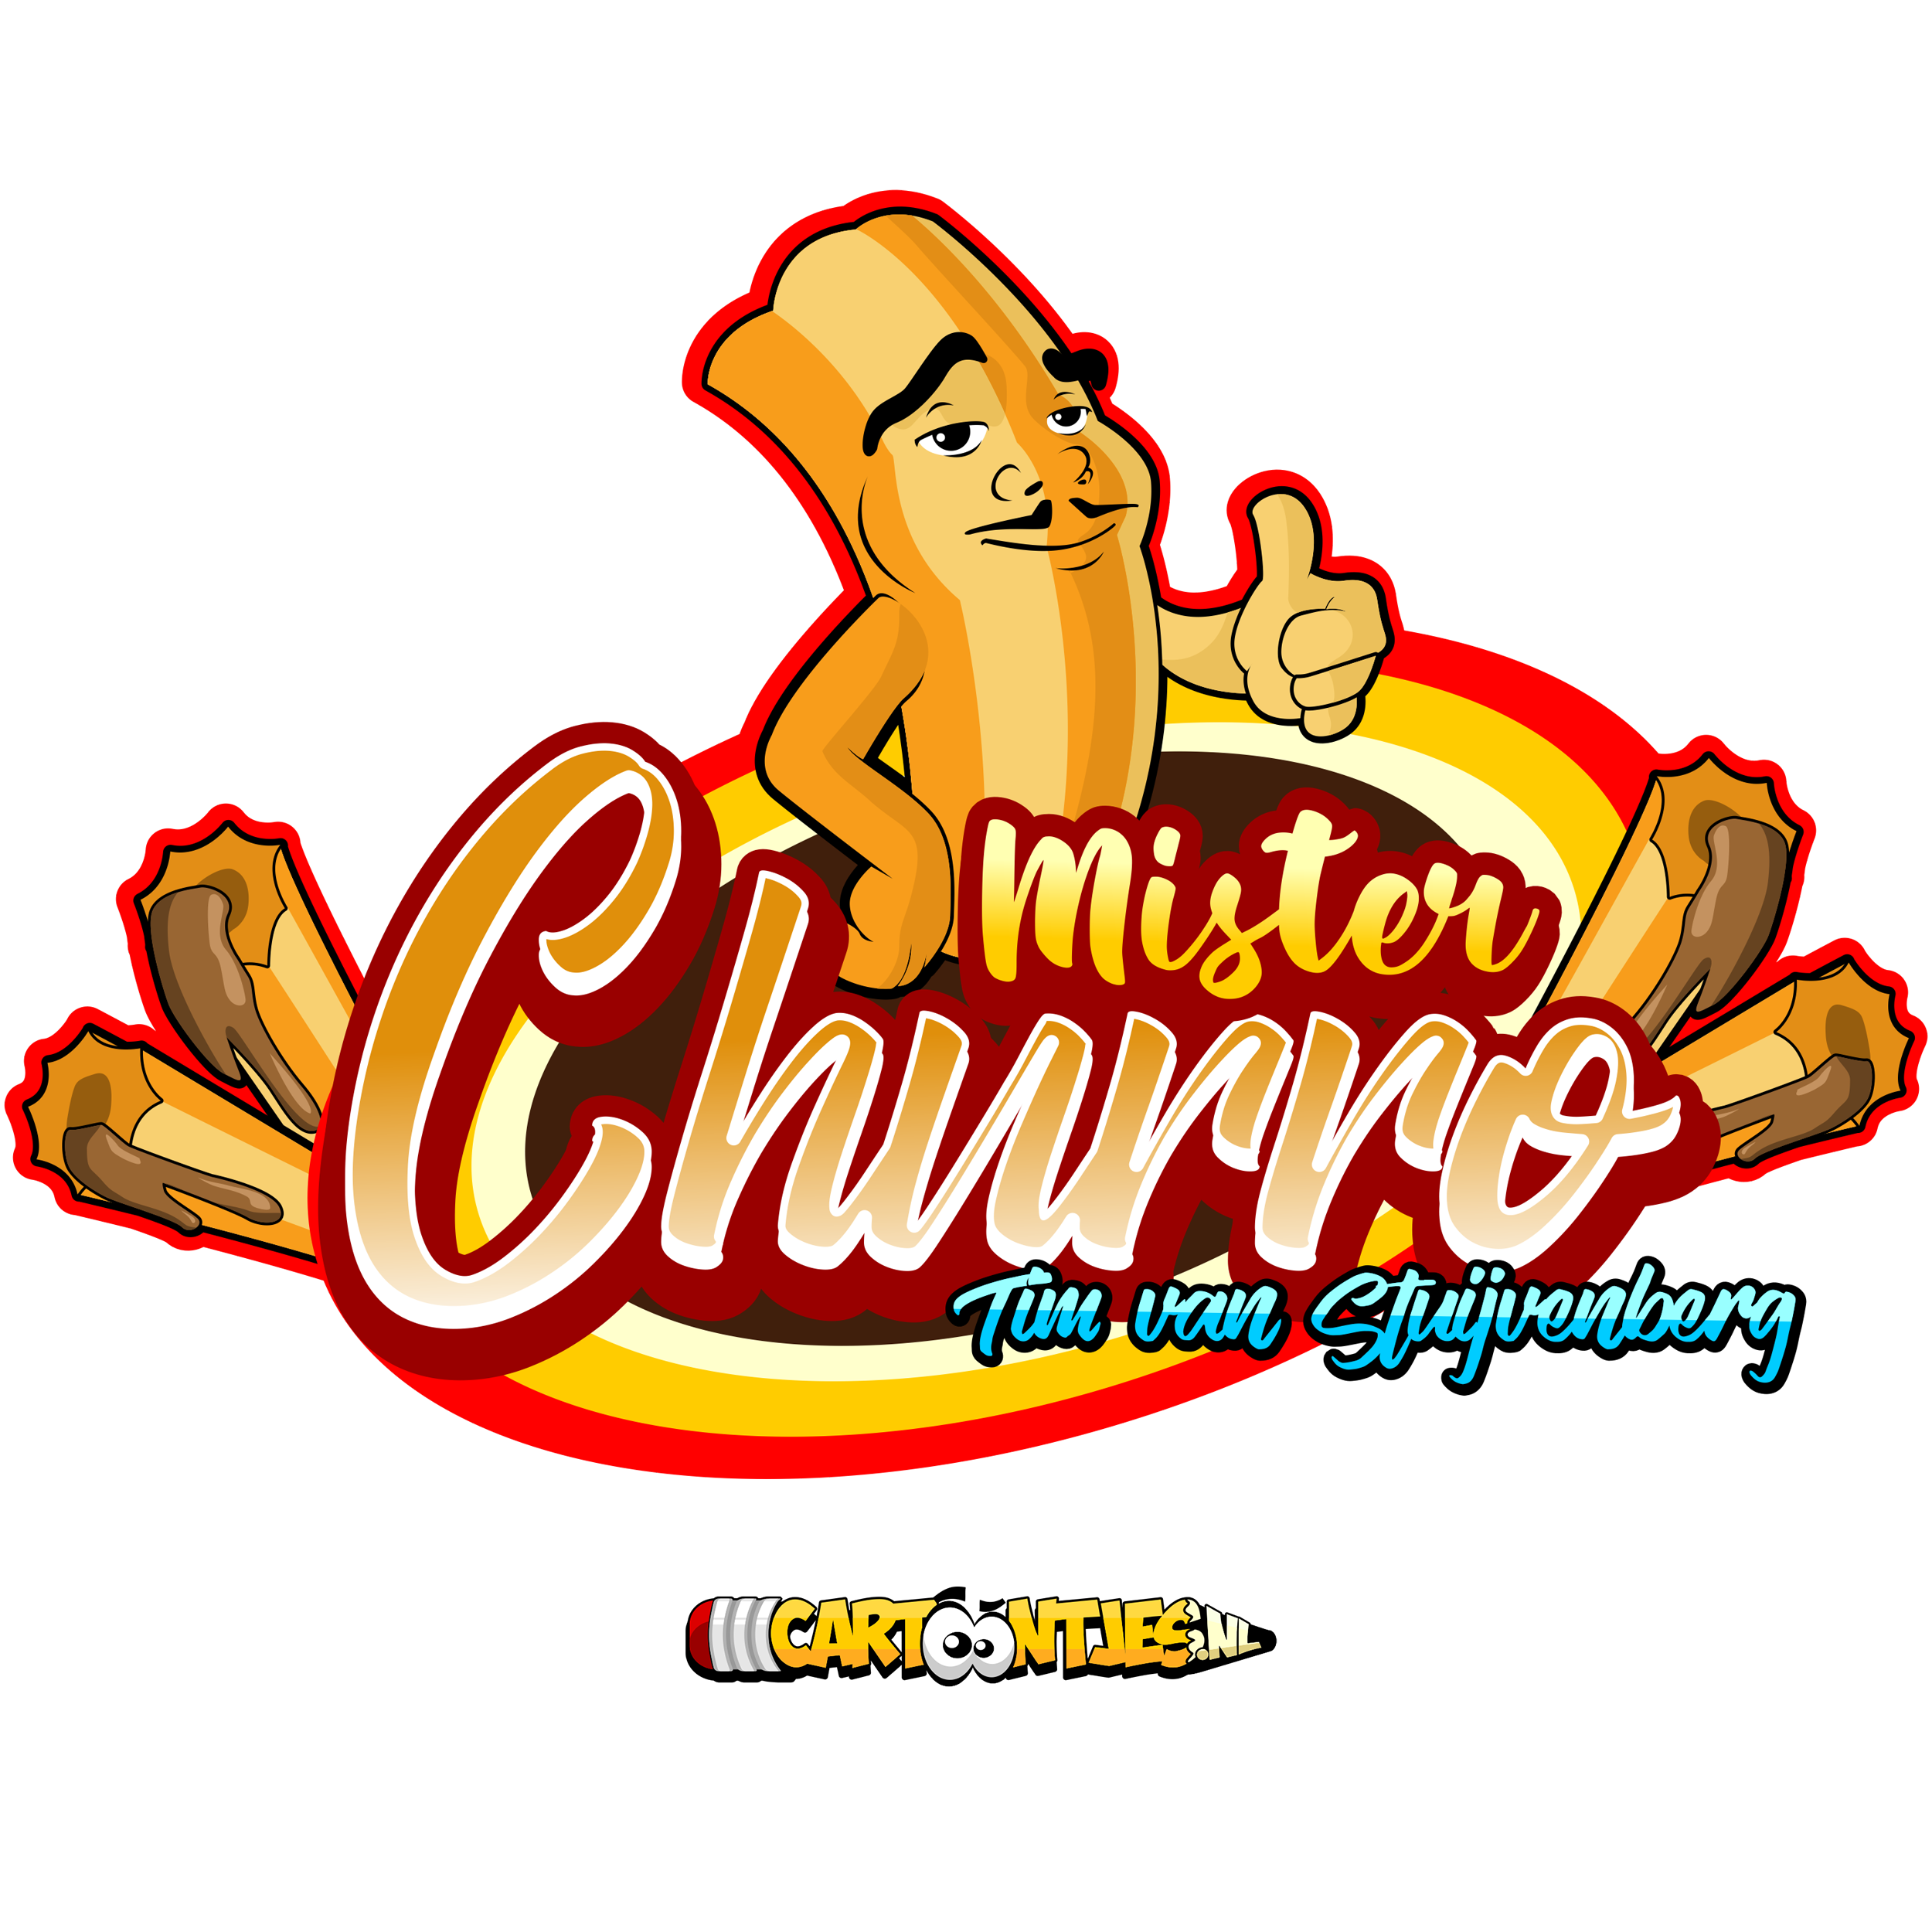 churros logo mister churro kermis